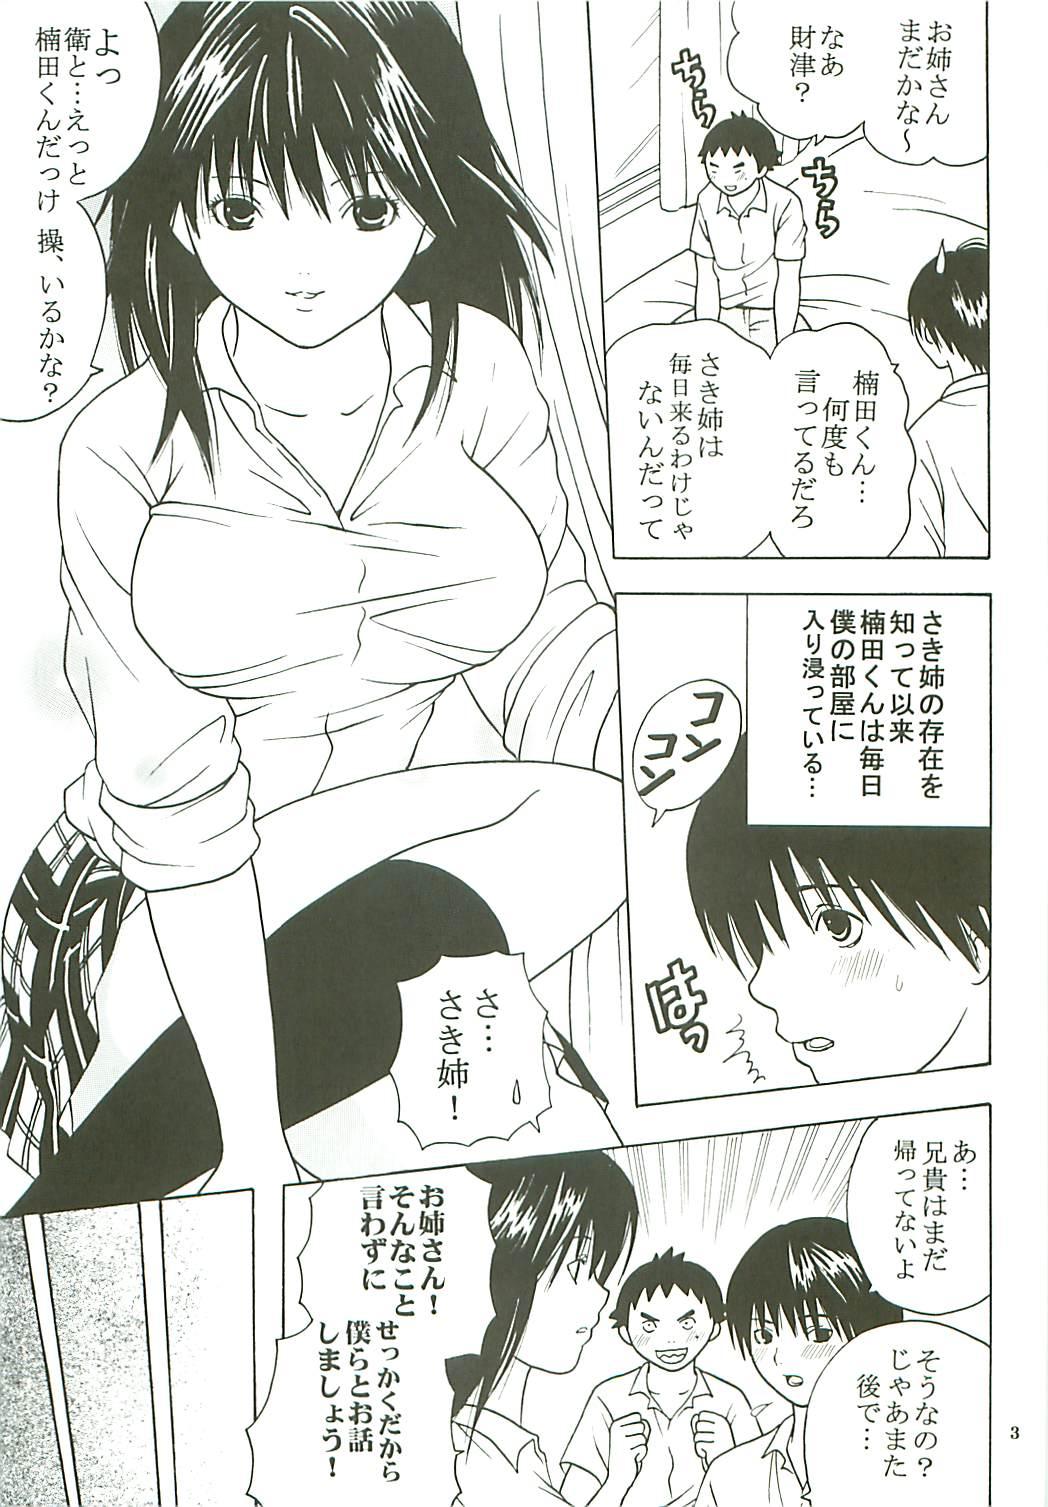 Head Chitsui Gentei Nakadashi Limited vol.3 - Hatsukoi limited Freeporn - Page 4